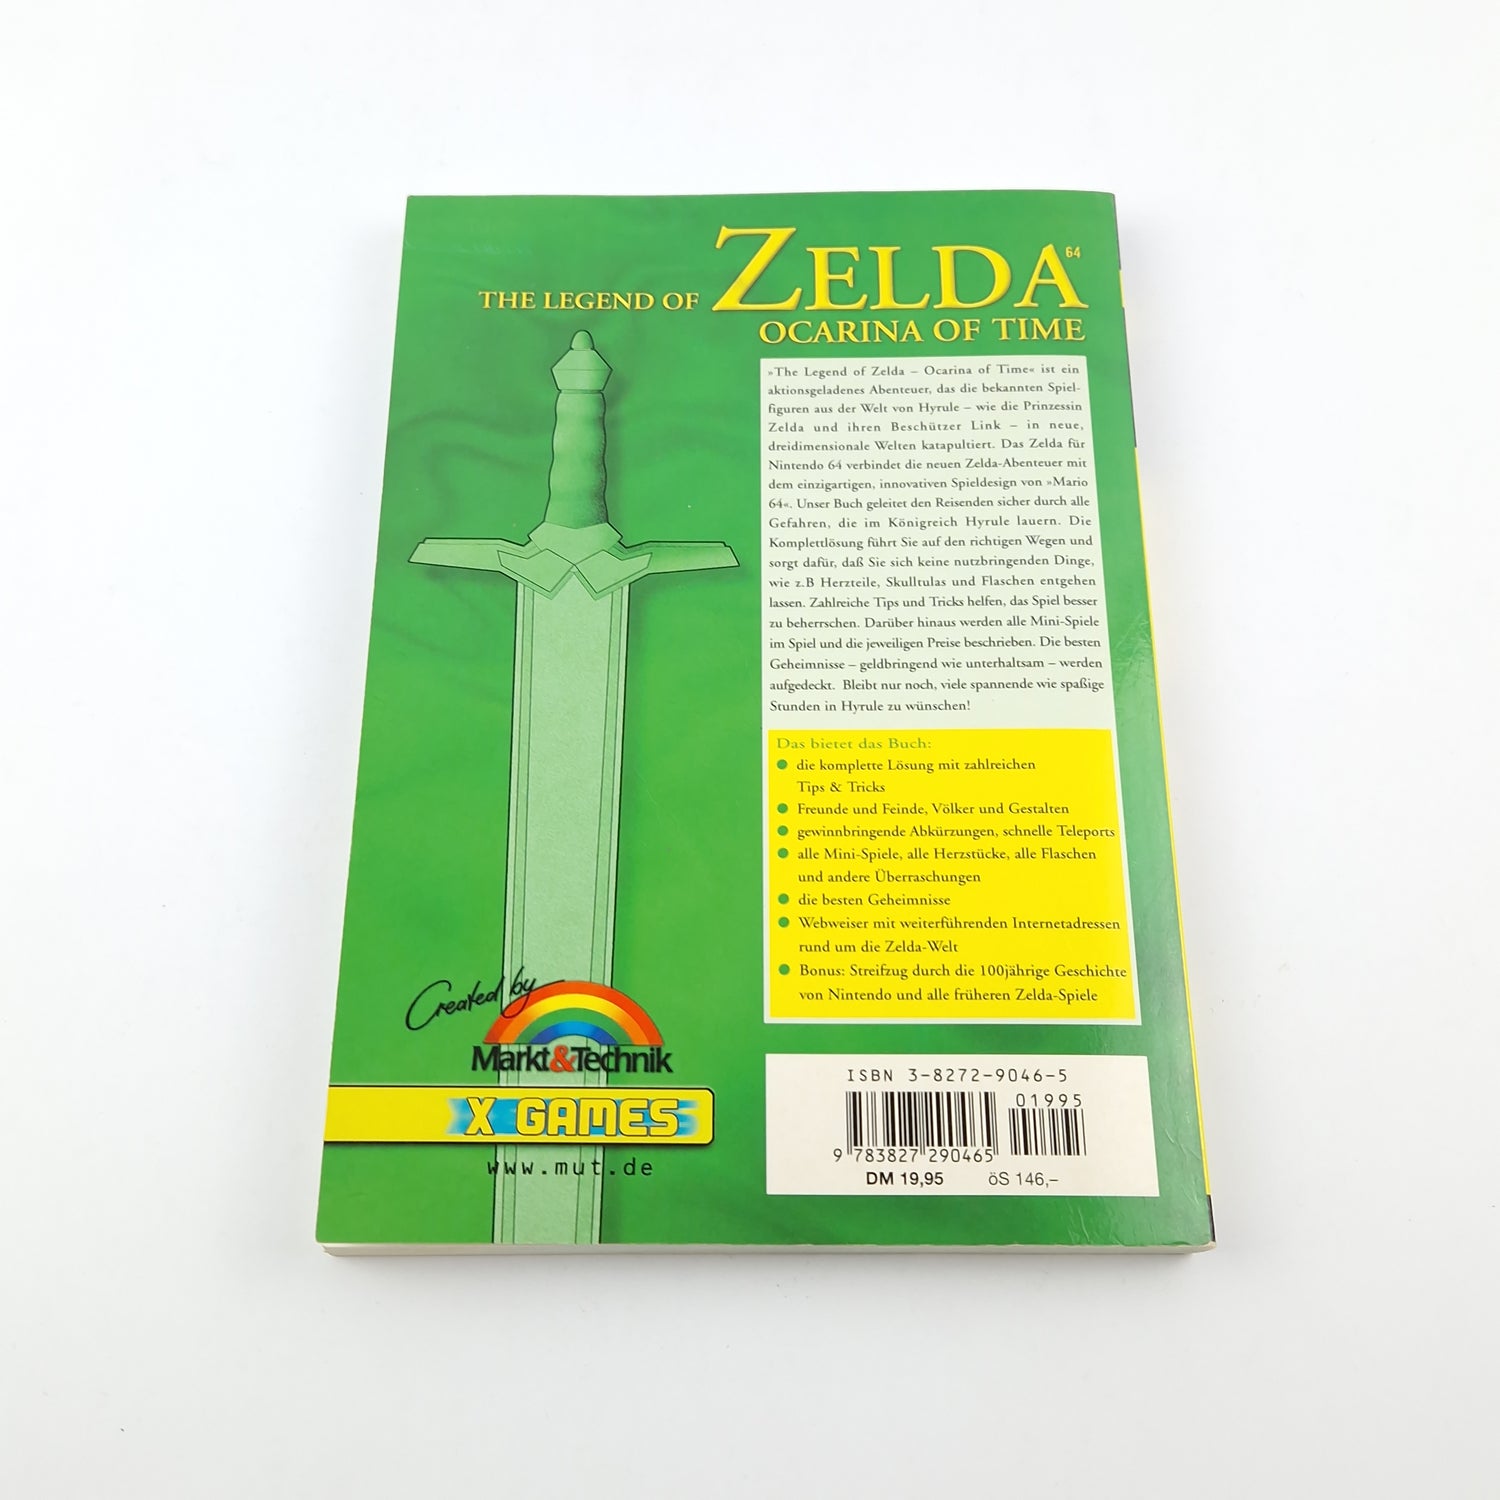 Zelda Ocarina of Time - The Adventure Handbook for Hyrule X Games Game Advisor